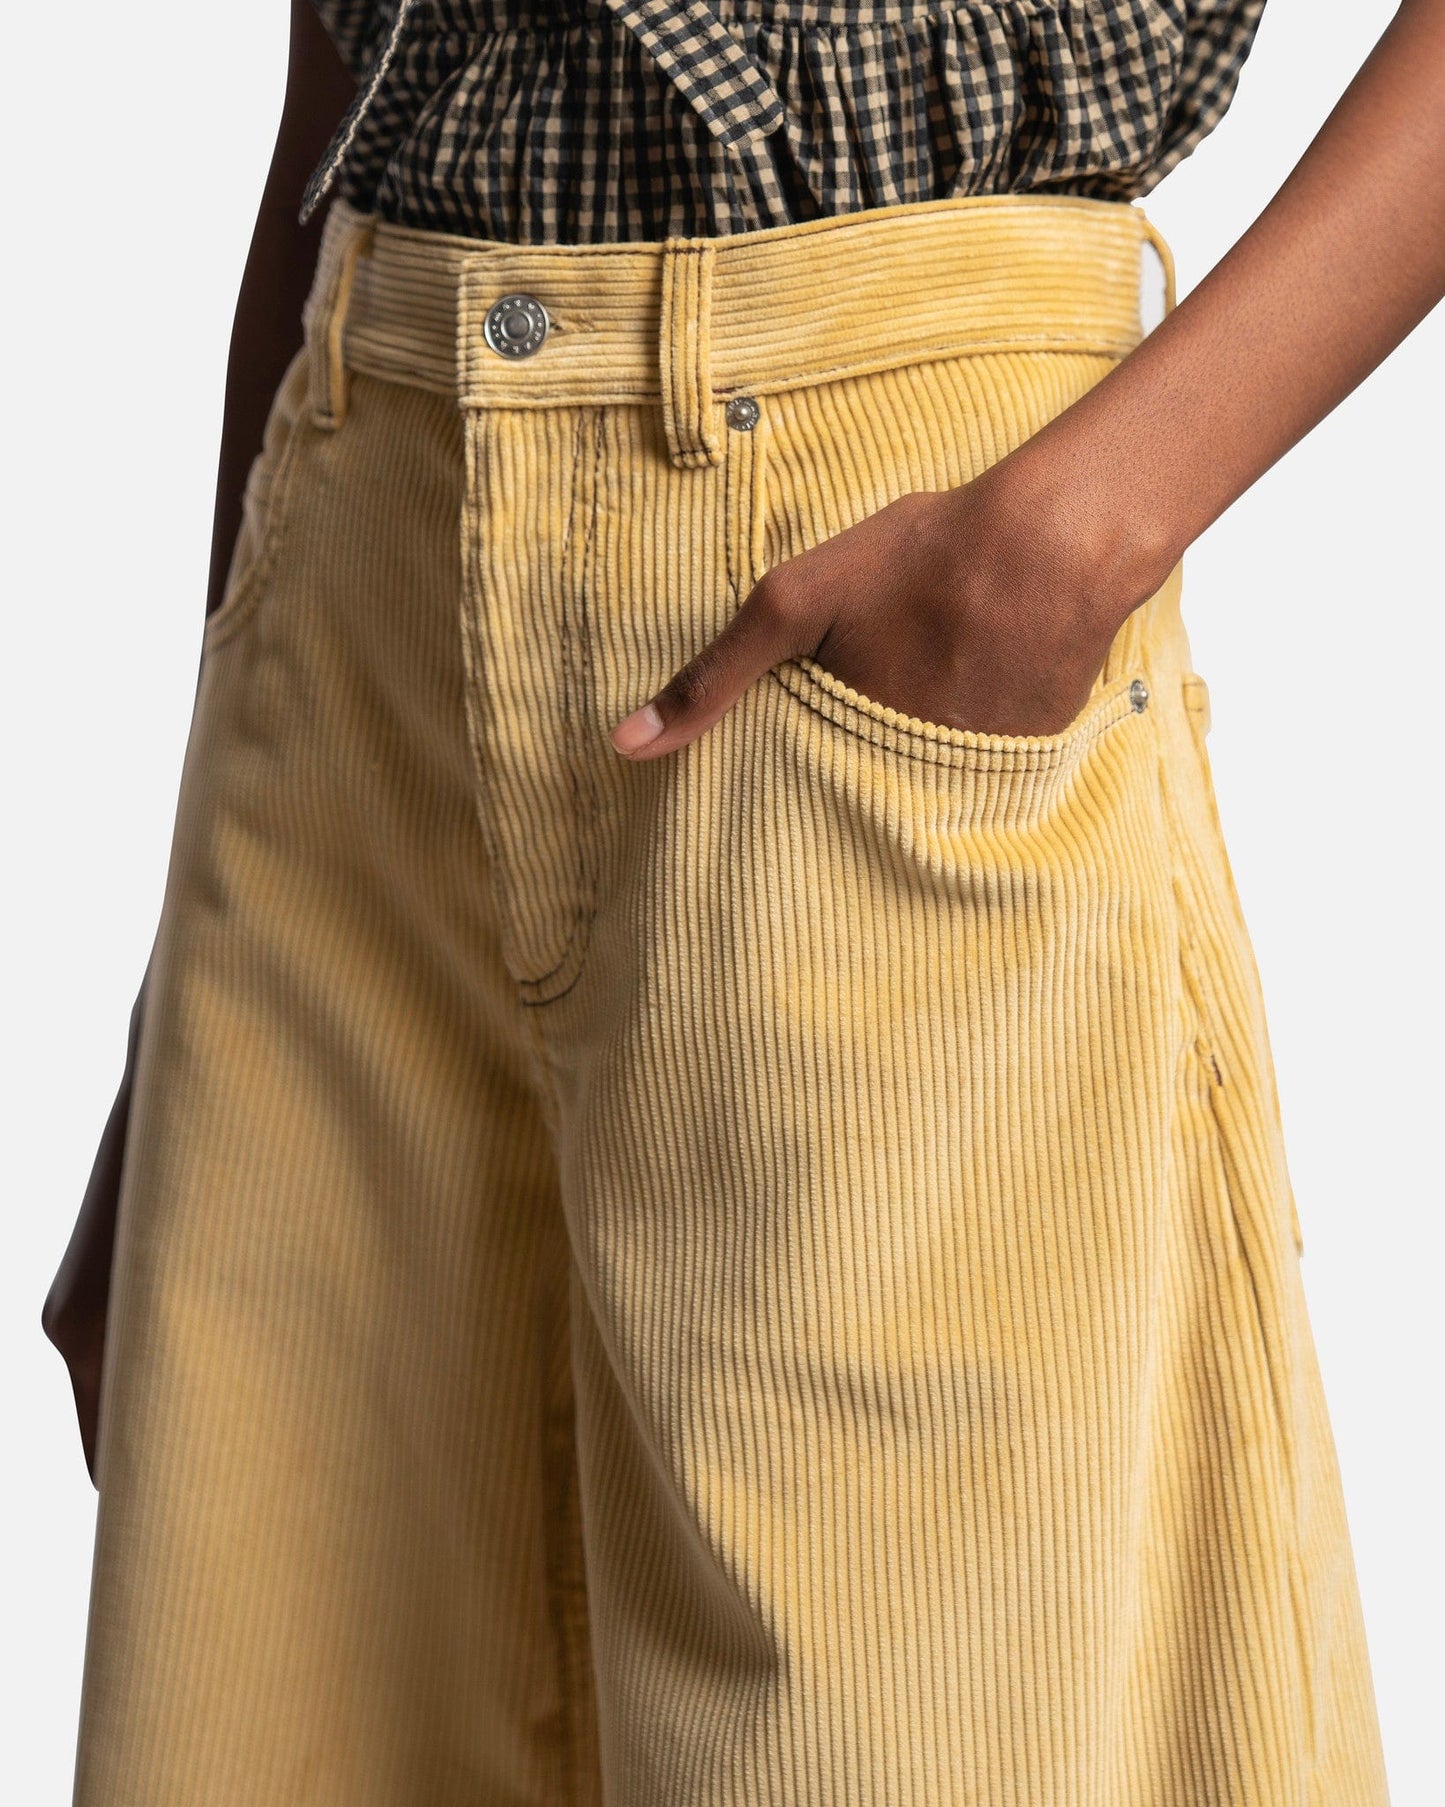 Marni Women Pants Cotton Corduroy Trousers in Vanilla